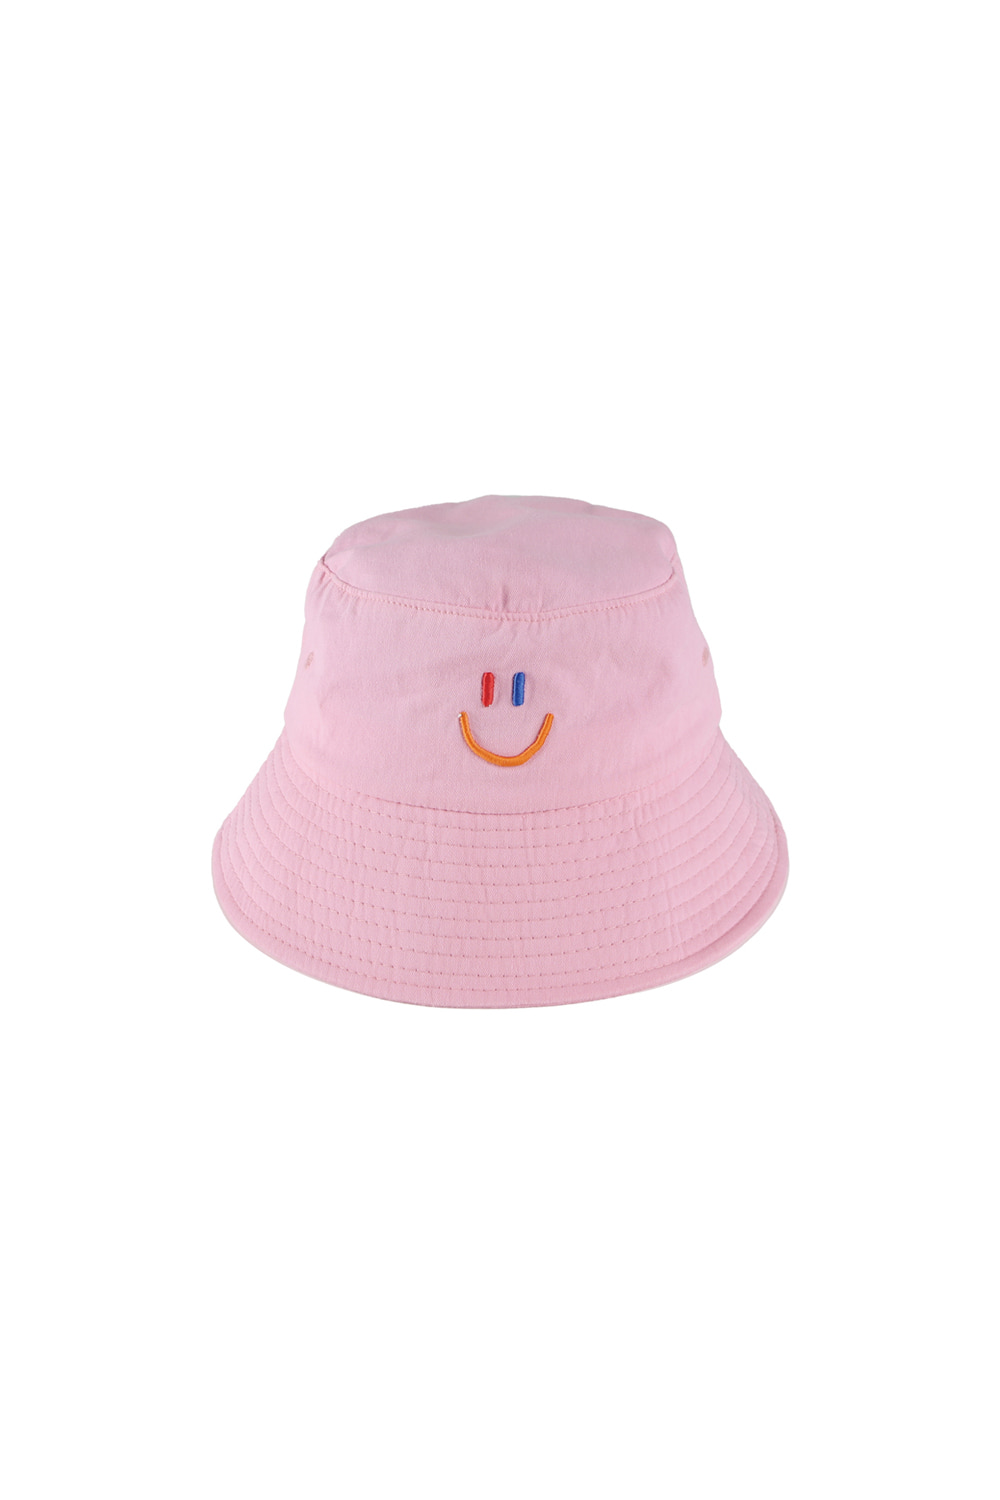 LaLa Cotton Bucket Hat [Pink]